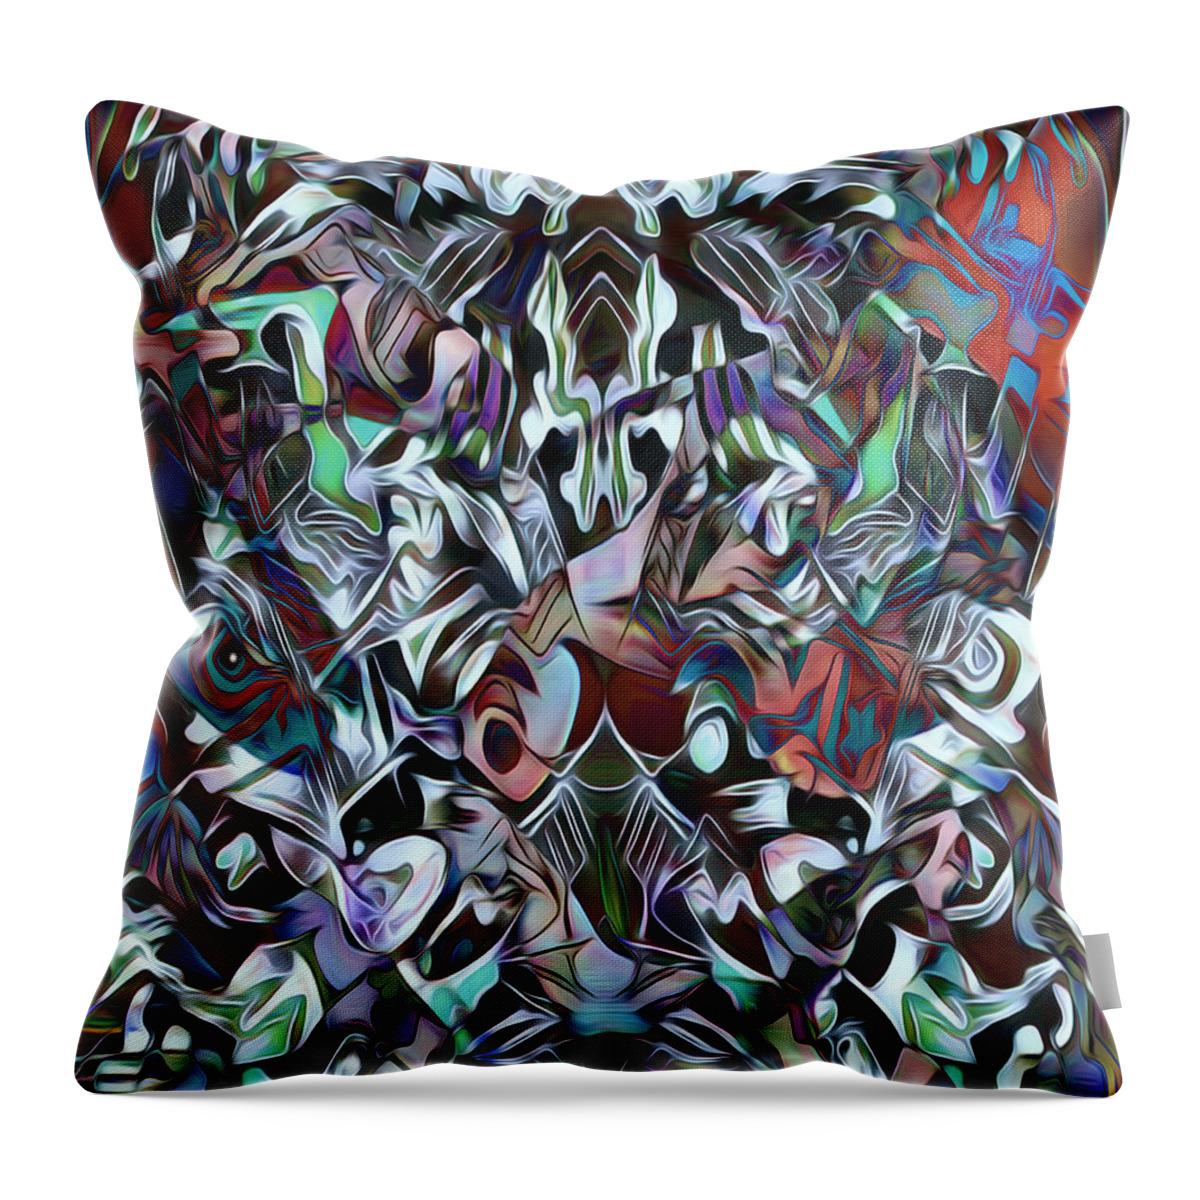 Cubism Throw Pillow featuring the digital art A Work in Progress by Jeff Malderez